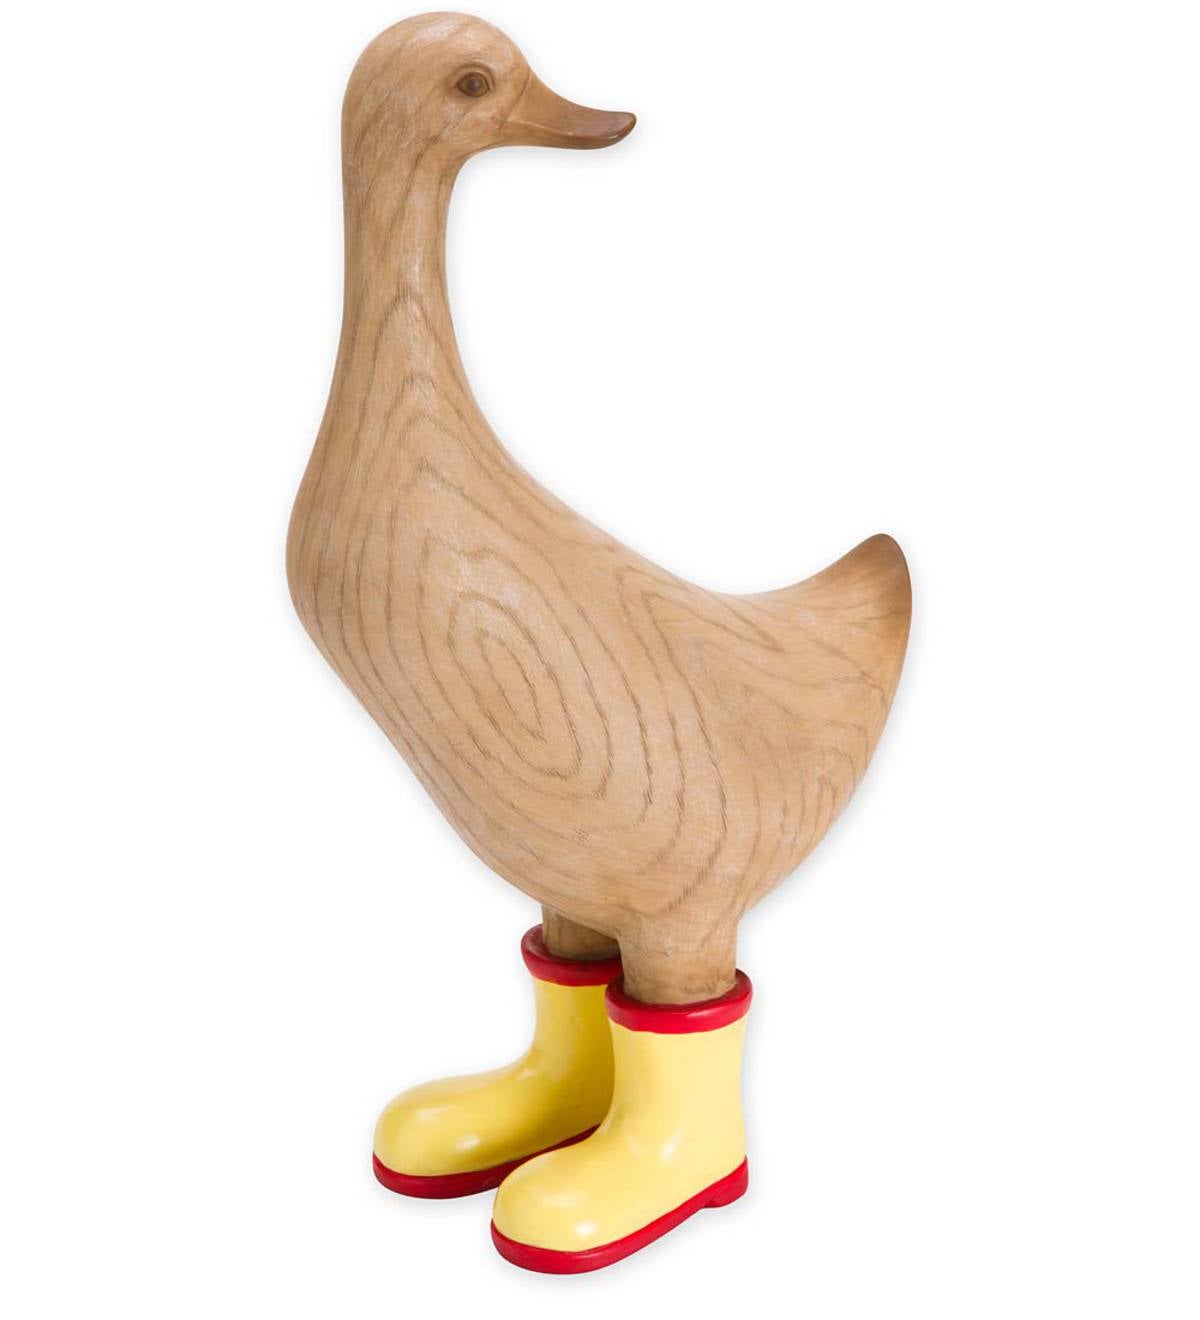 Buy > ducks with rain boots > in stock